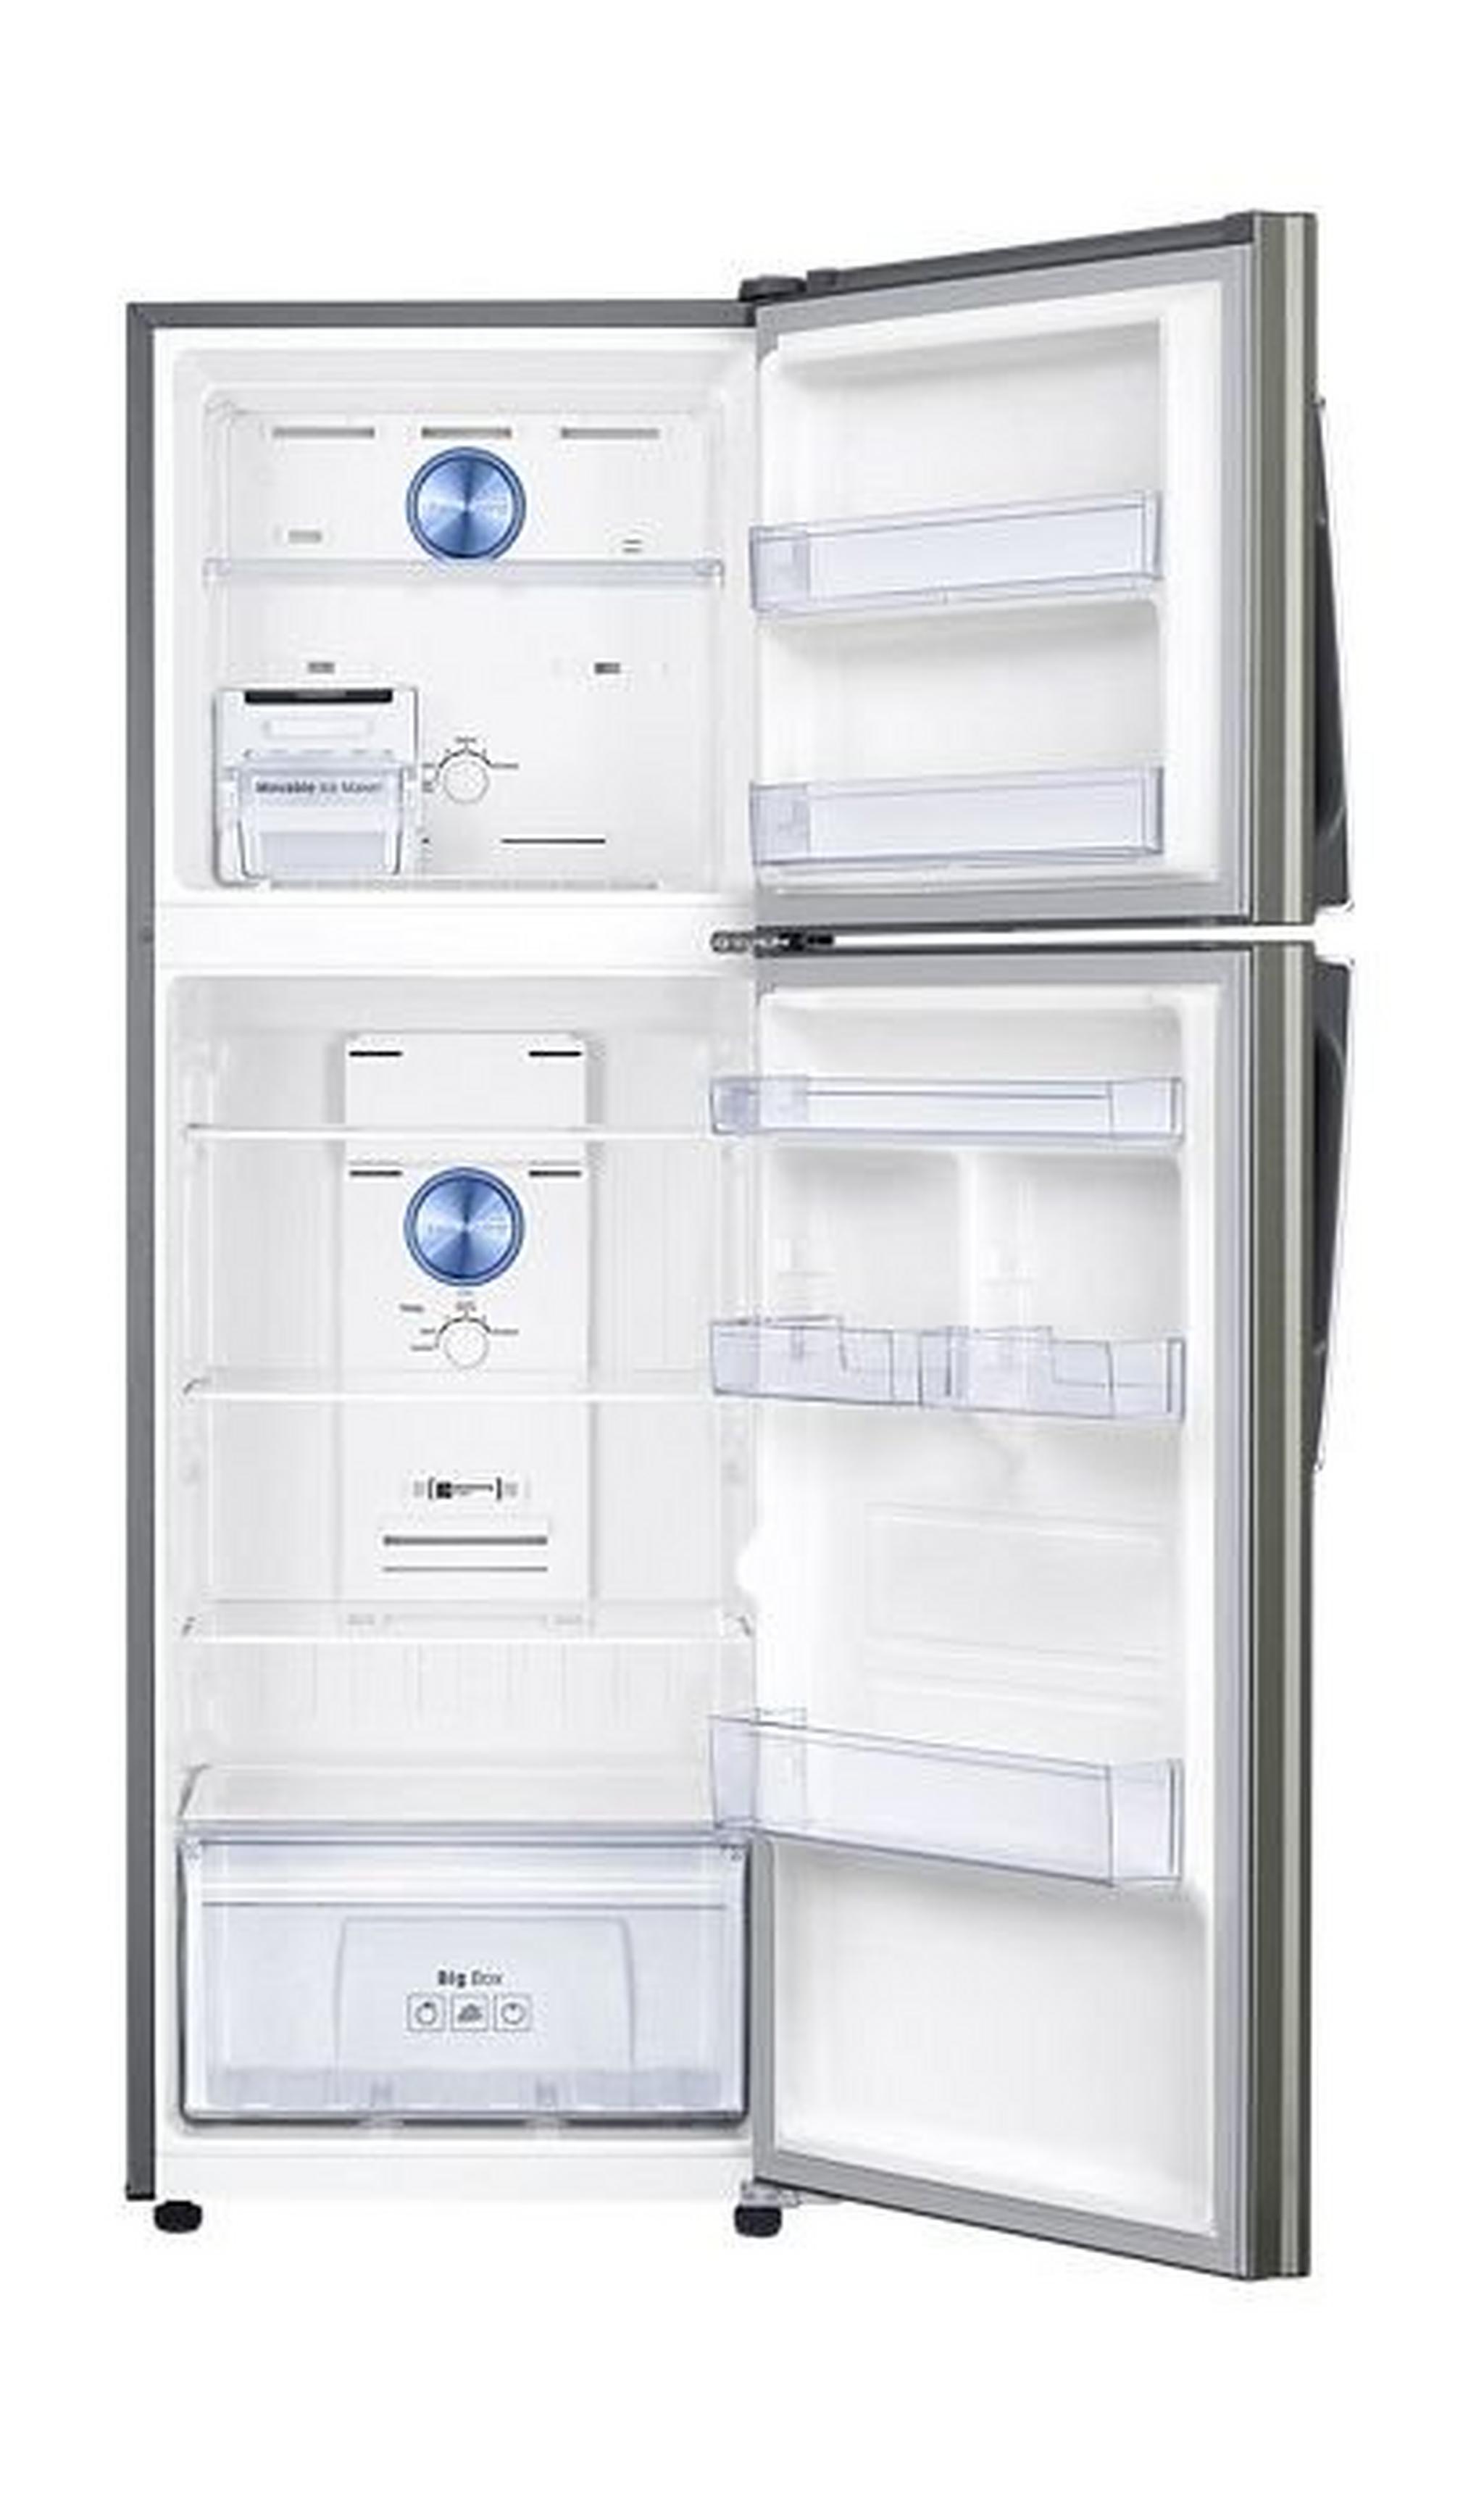 Samsung 15 Cft Top Mounted Freezer & Refrigerator (RT42K5110SP) - Inox